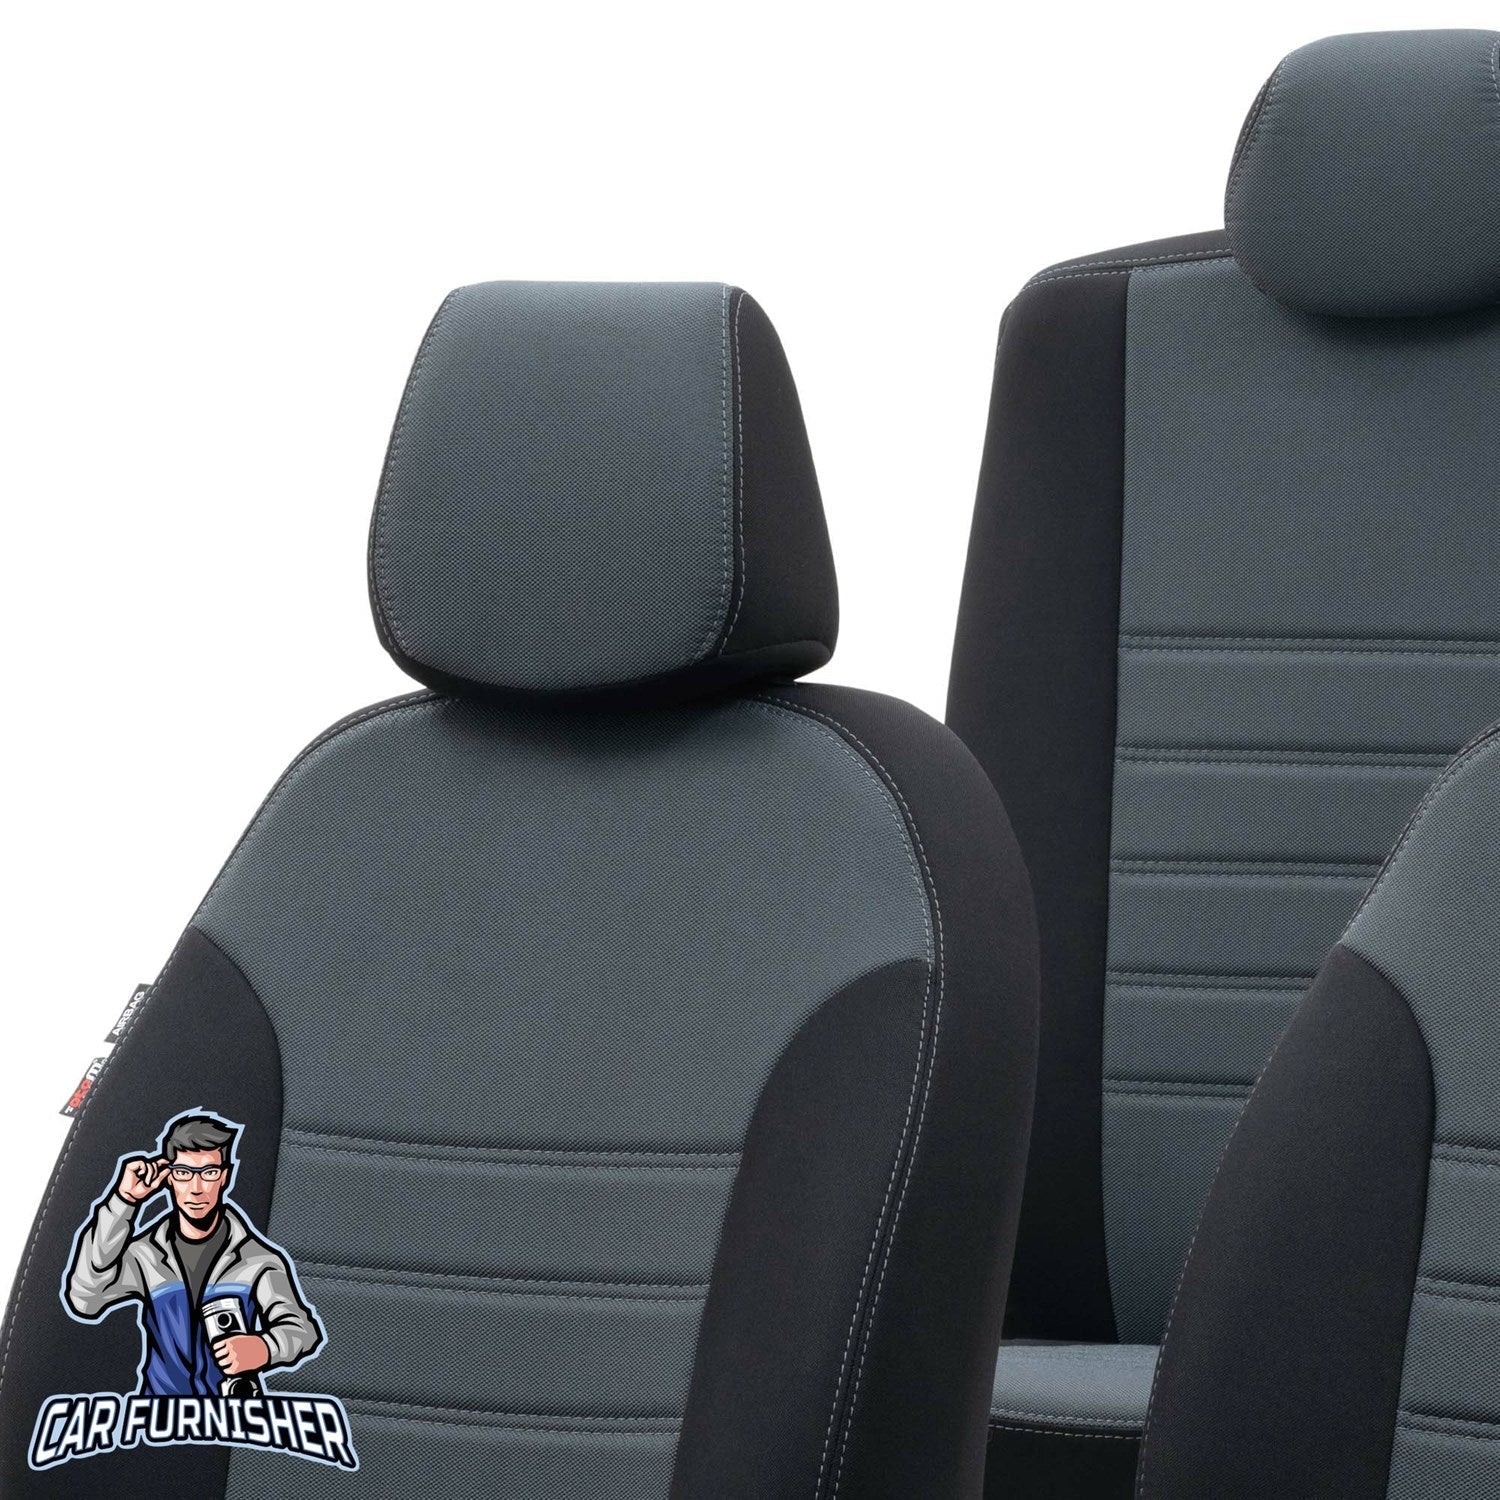 Mitsubishi Spacestar Seat Cover Original Jacquard Design Smoked Black Jacquard Fabric